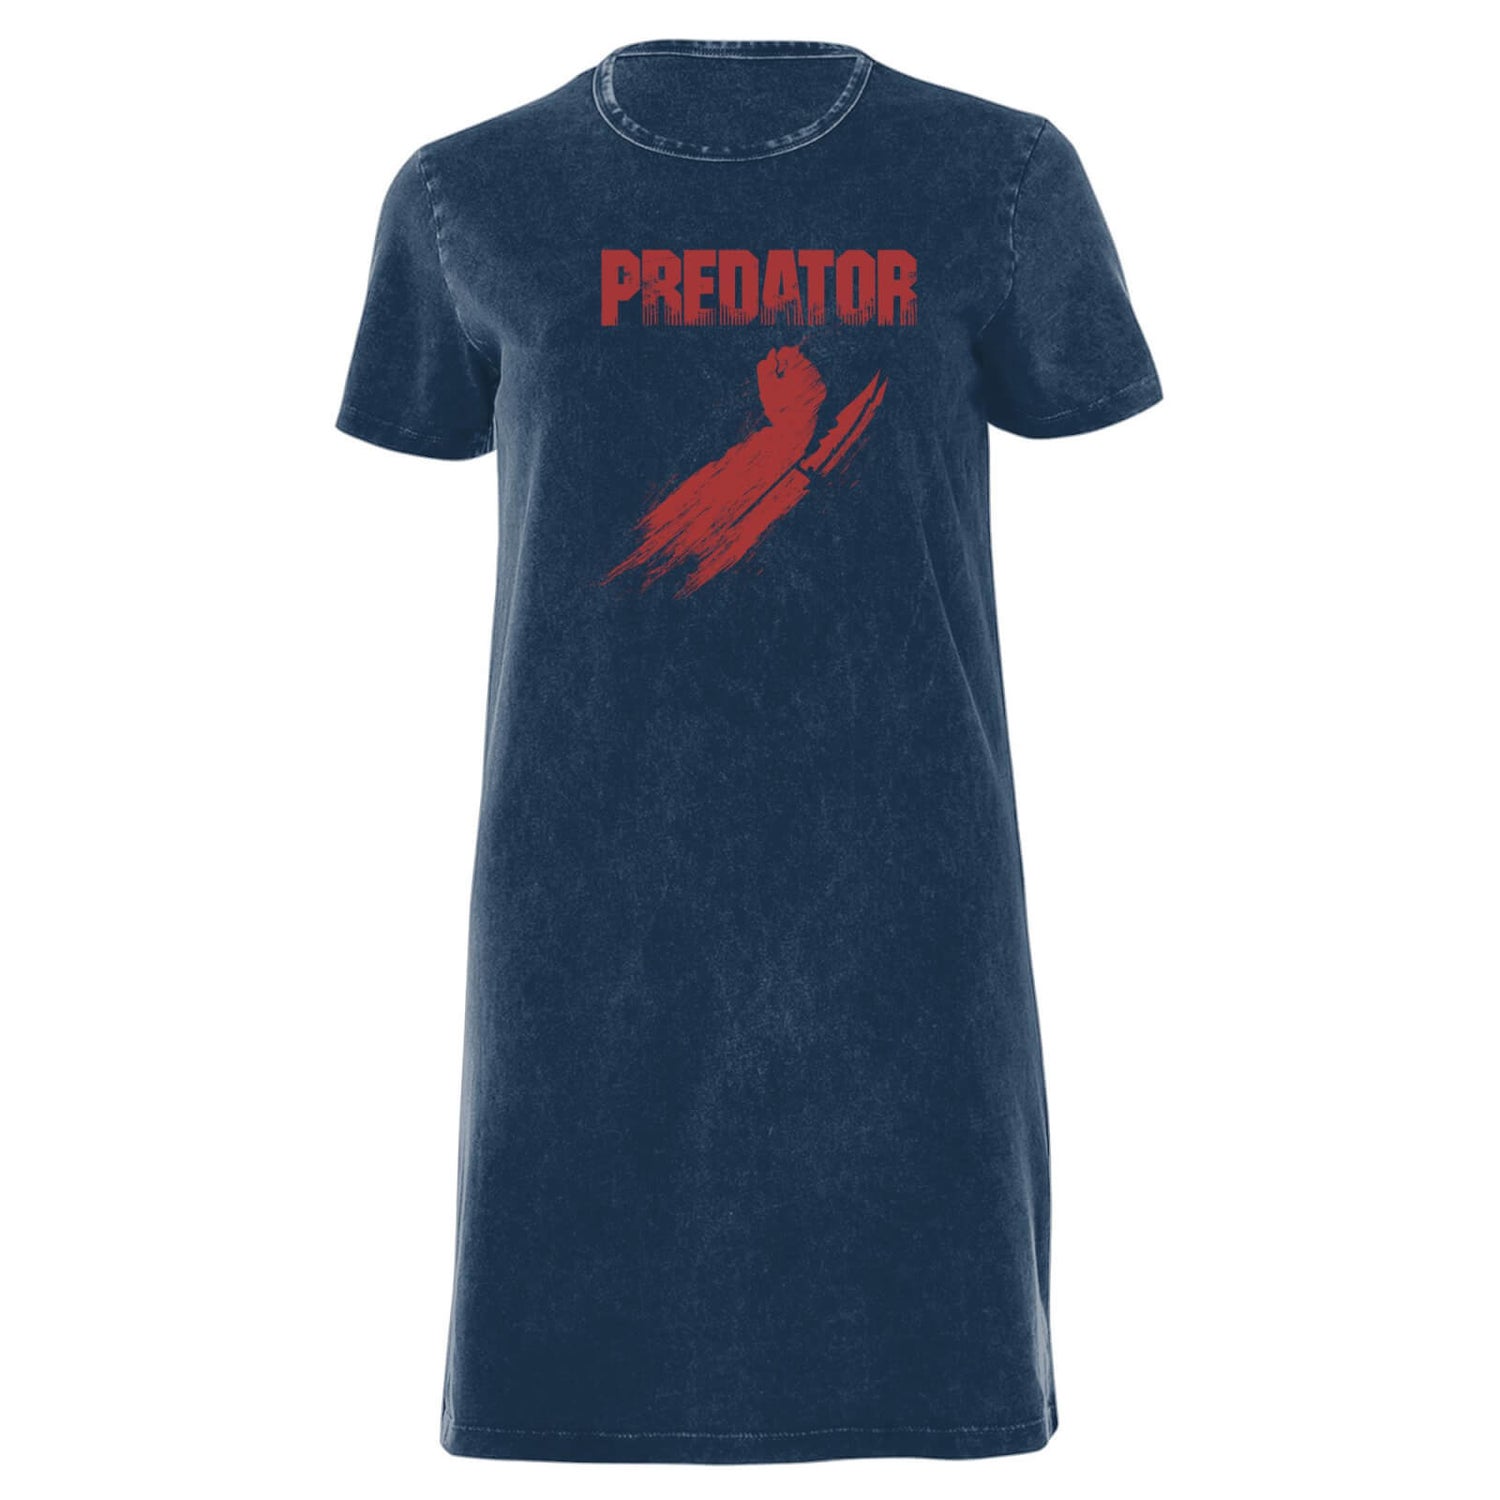 Predator Arm Blades Women's T-Shirt Dress - Navy Acid Wash